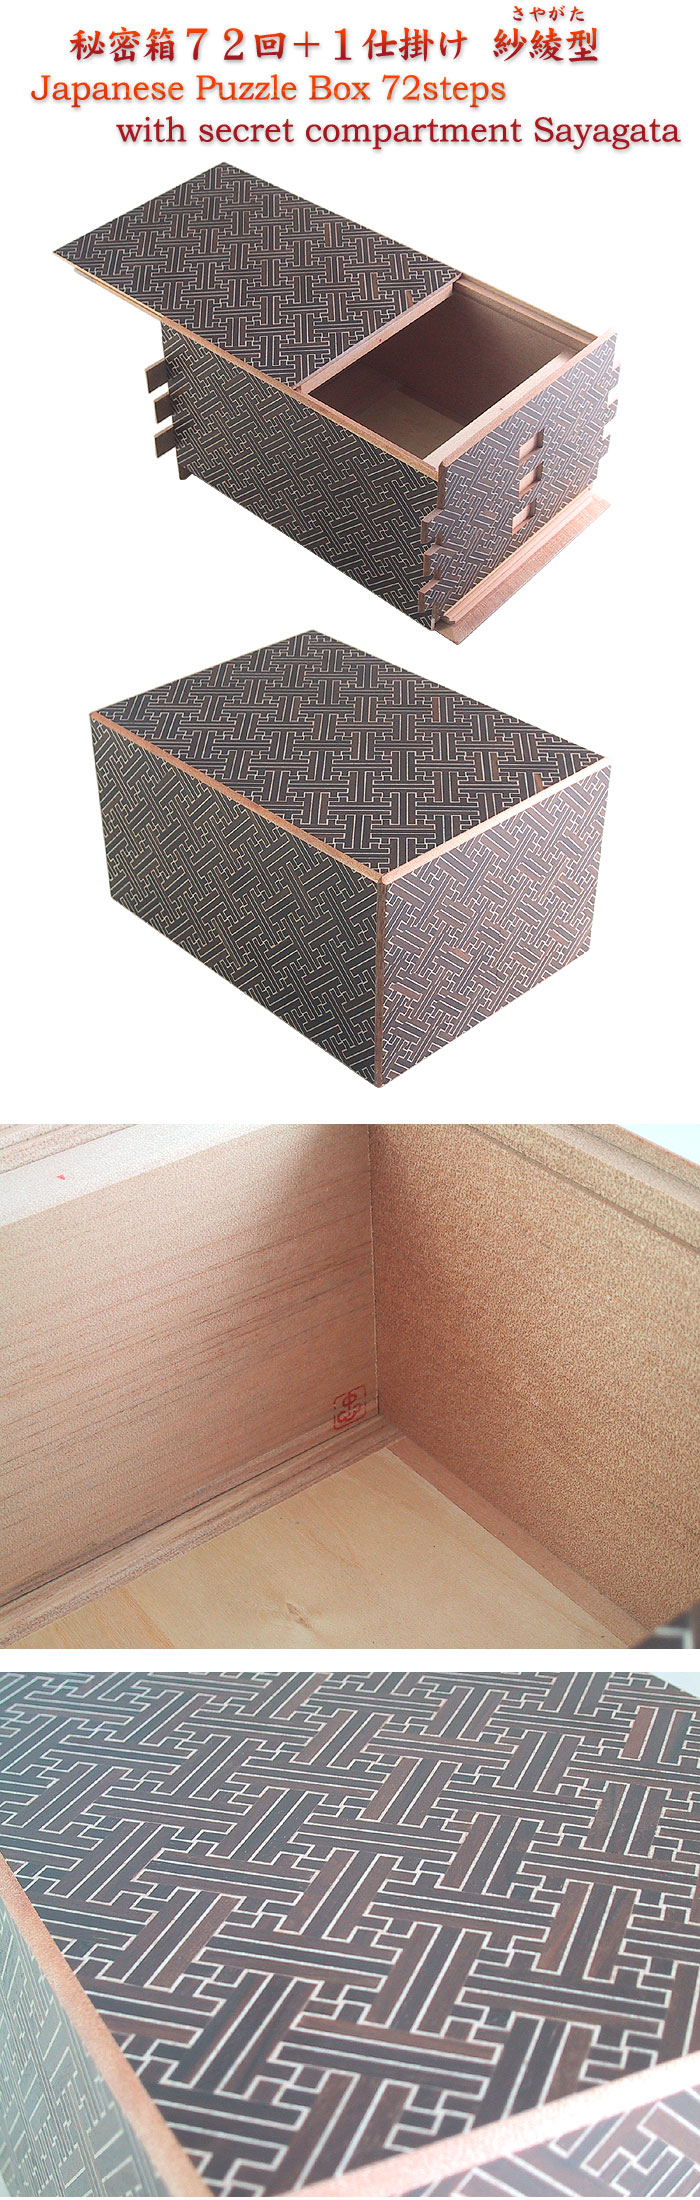 Japanese Puzzle Box 72steps with secret compartment Sayagata